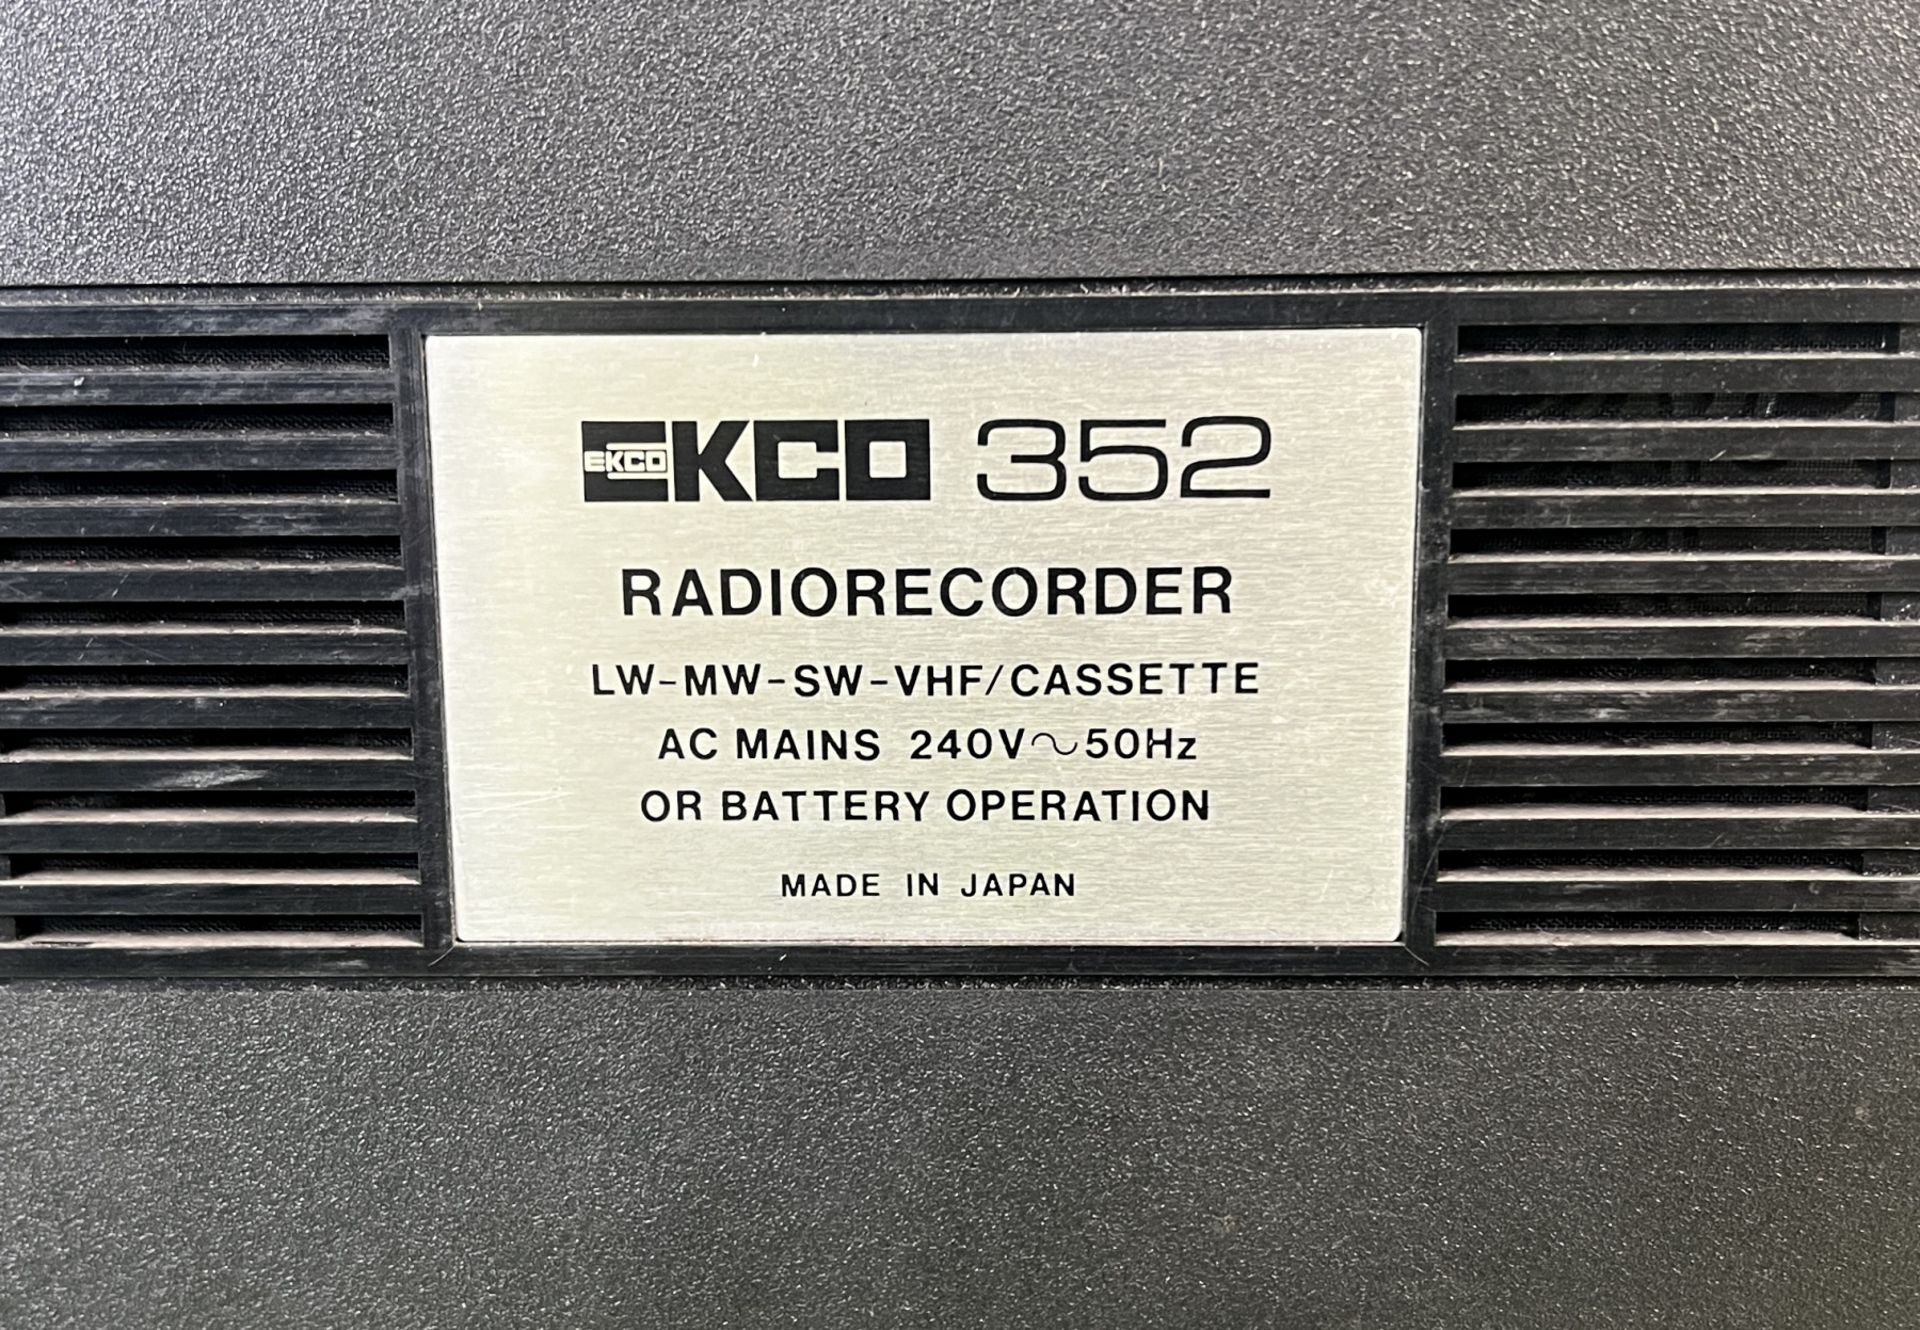 Ekco 352 Autostop portable radio cassette recorder - Image 3 of 4